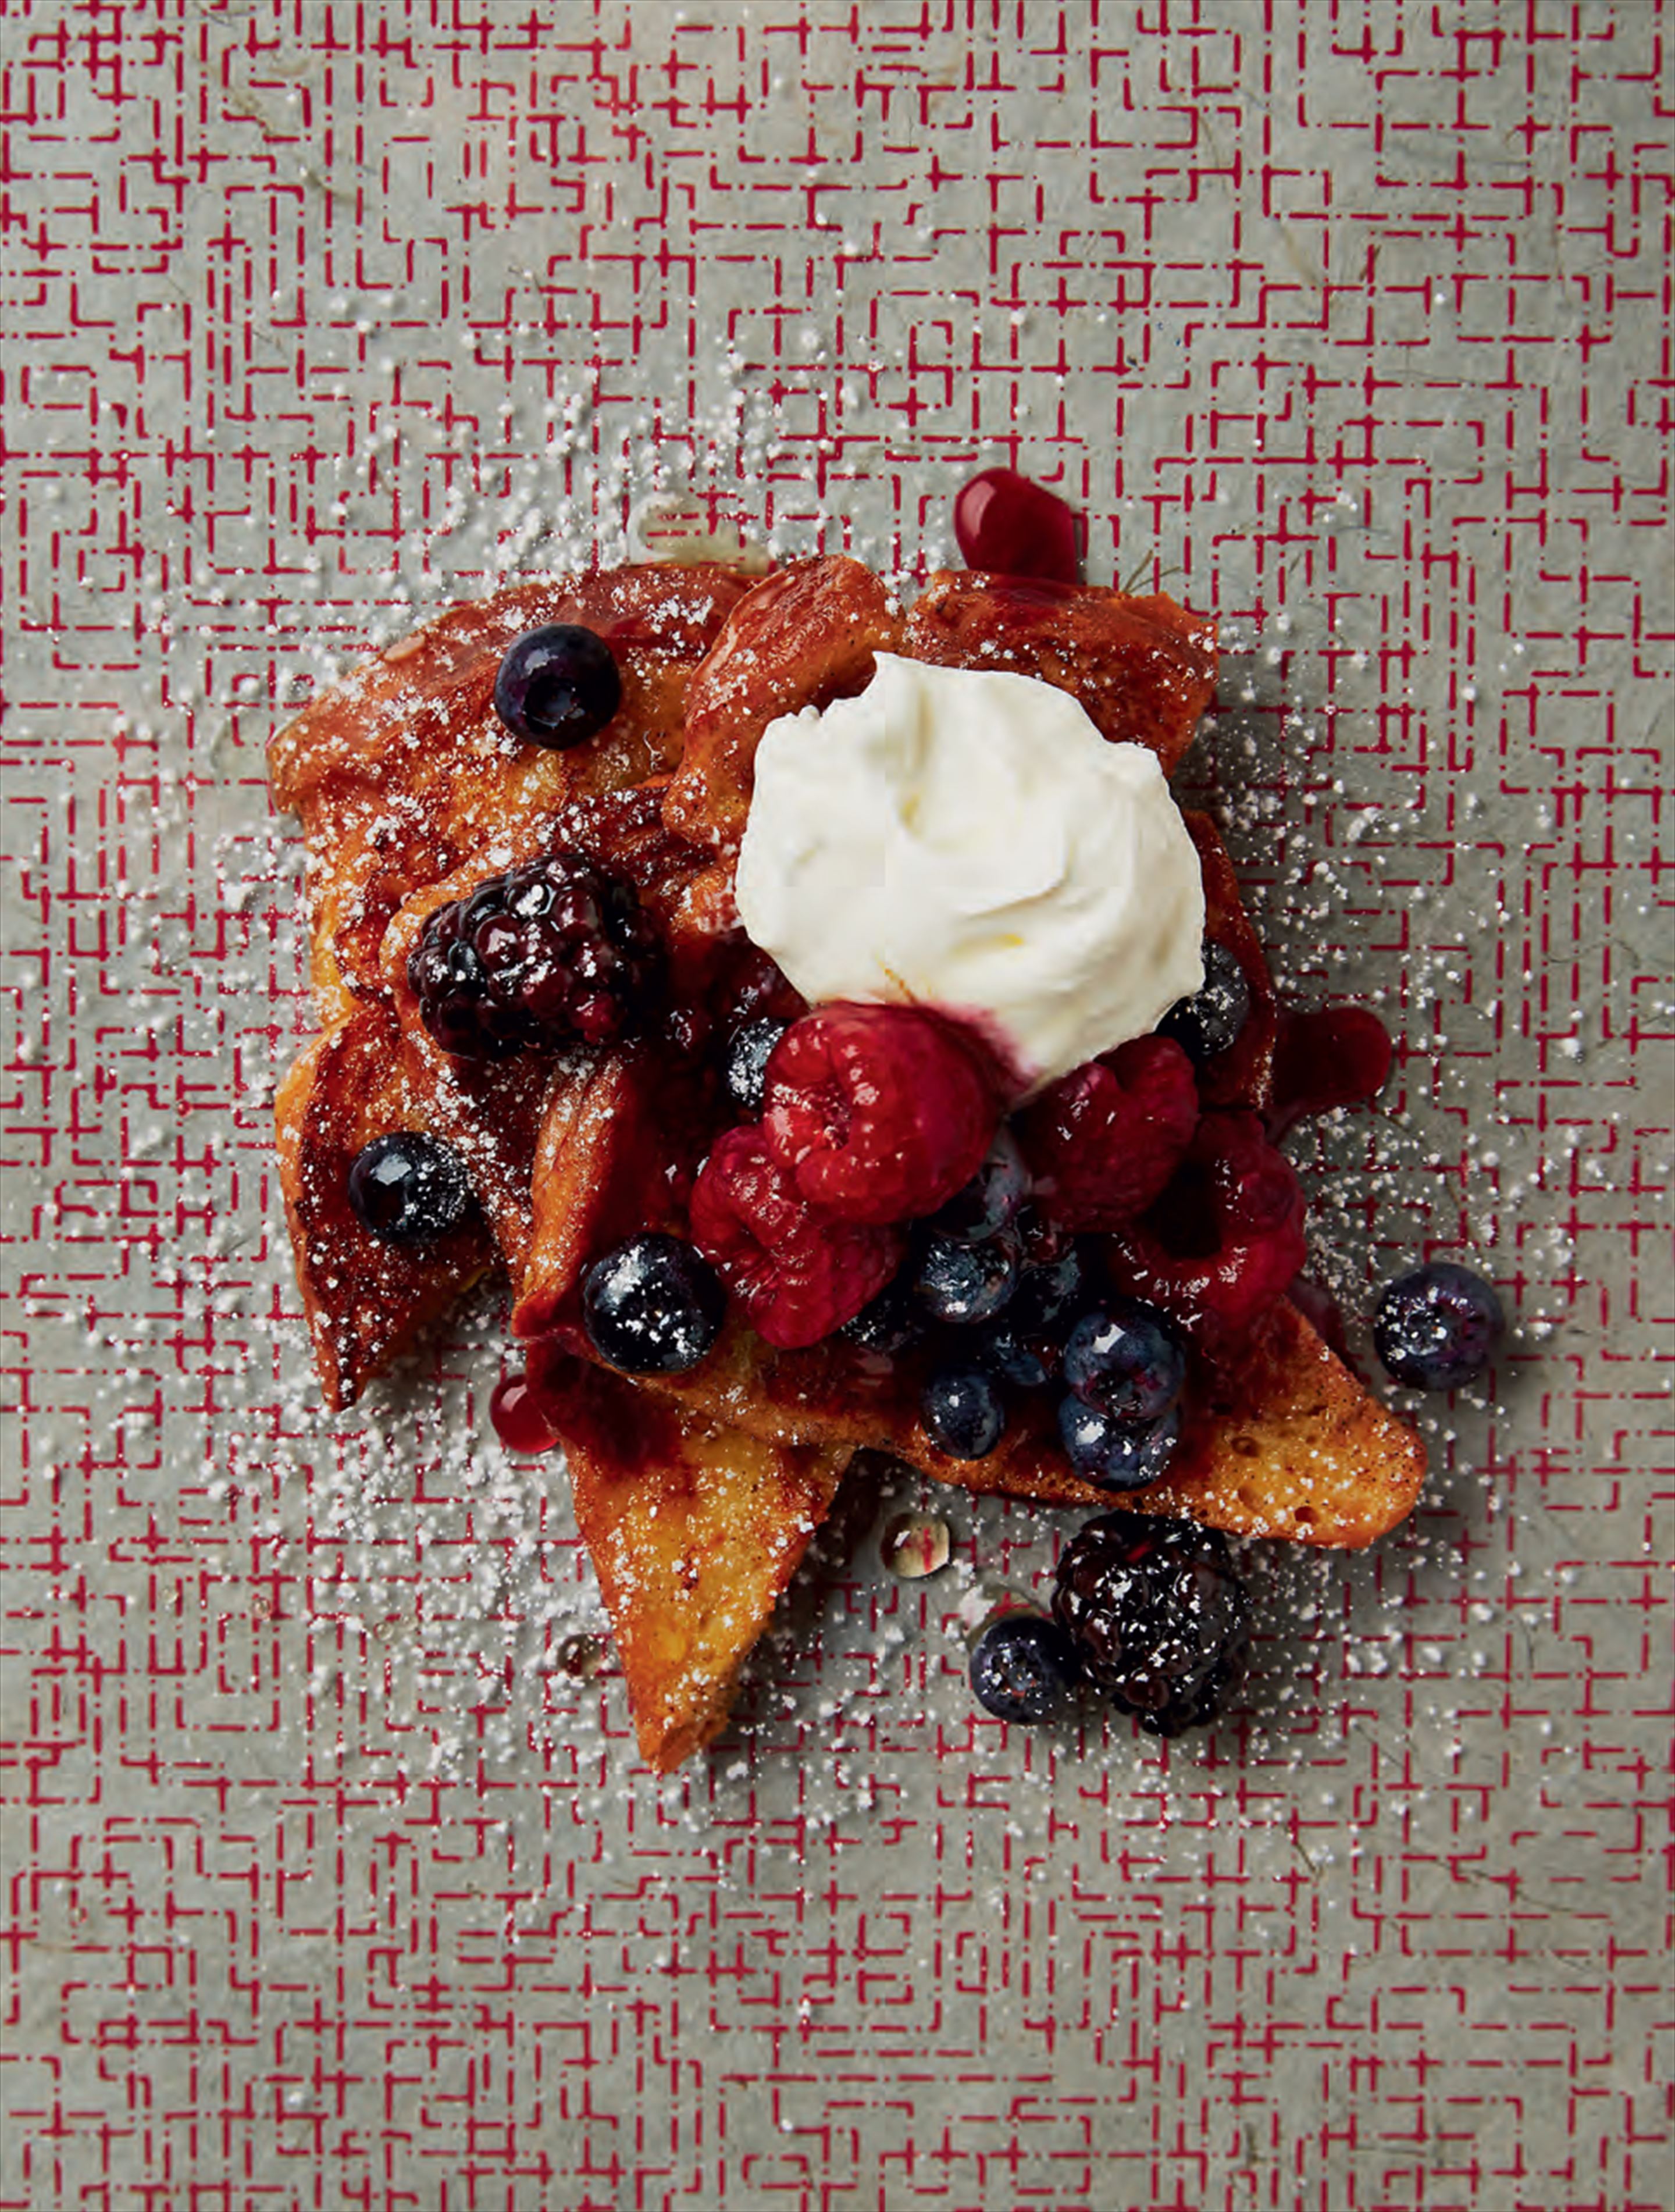 French toast berries & mascarpone